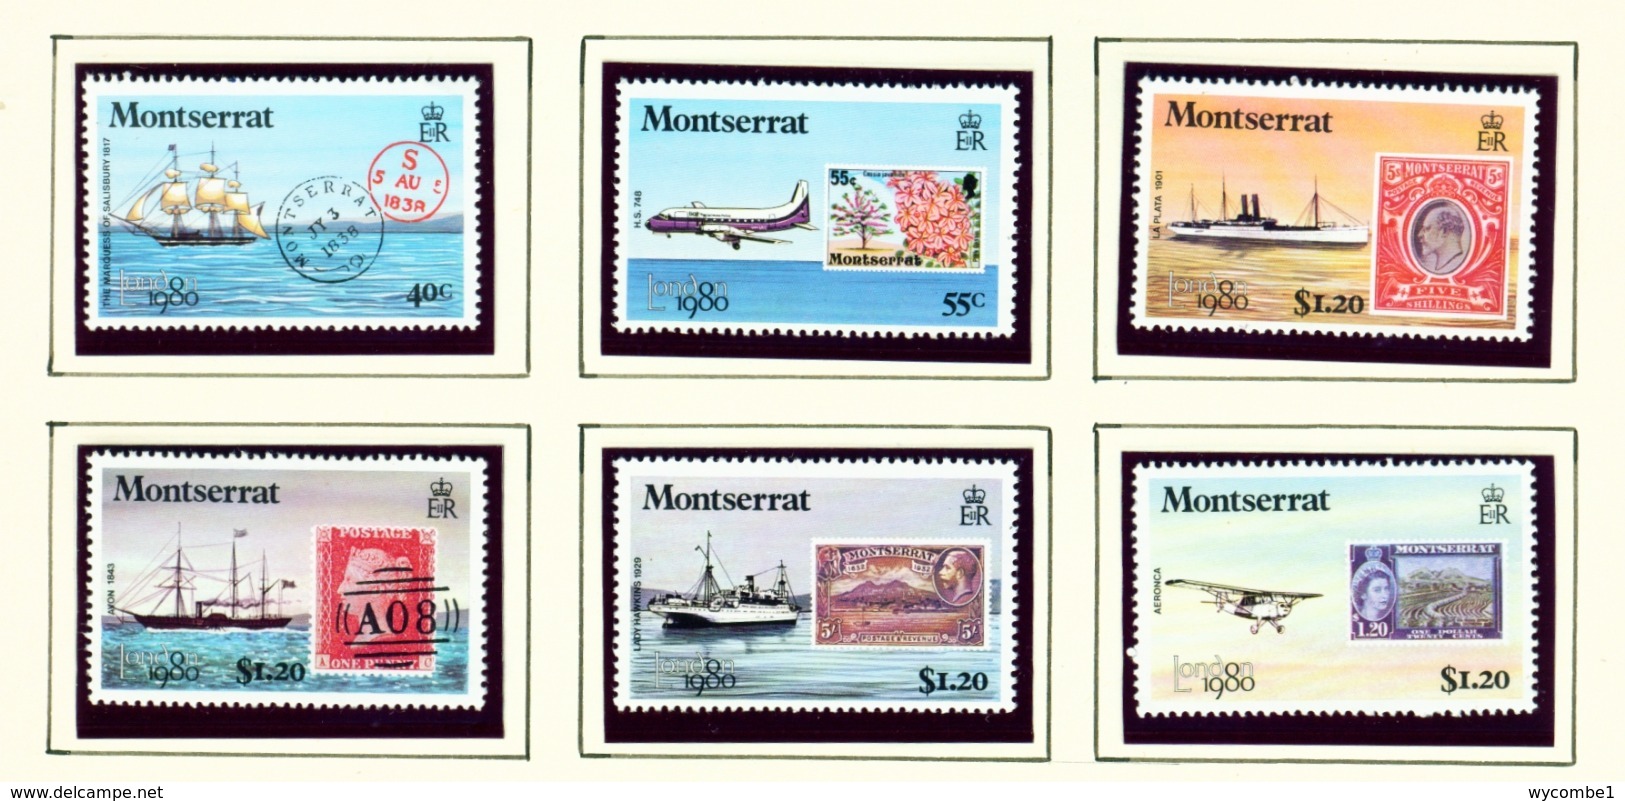 MONTSERRAT - 1980 London 1980 Set Unmounted/Never Hinged Mint - Montserrat